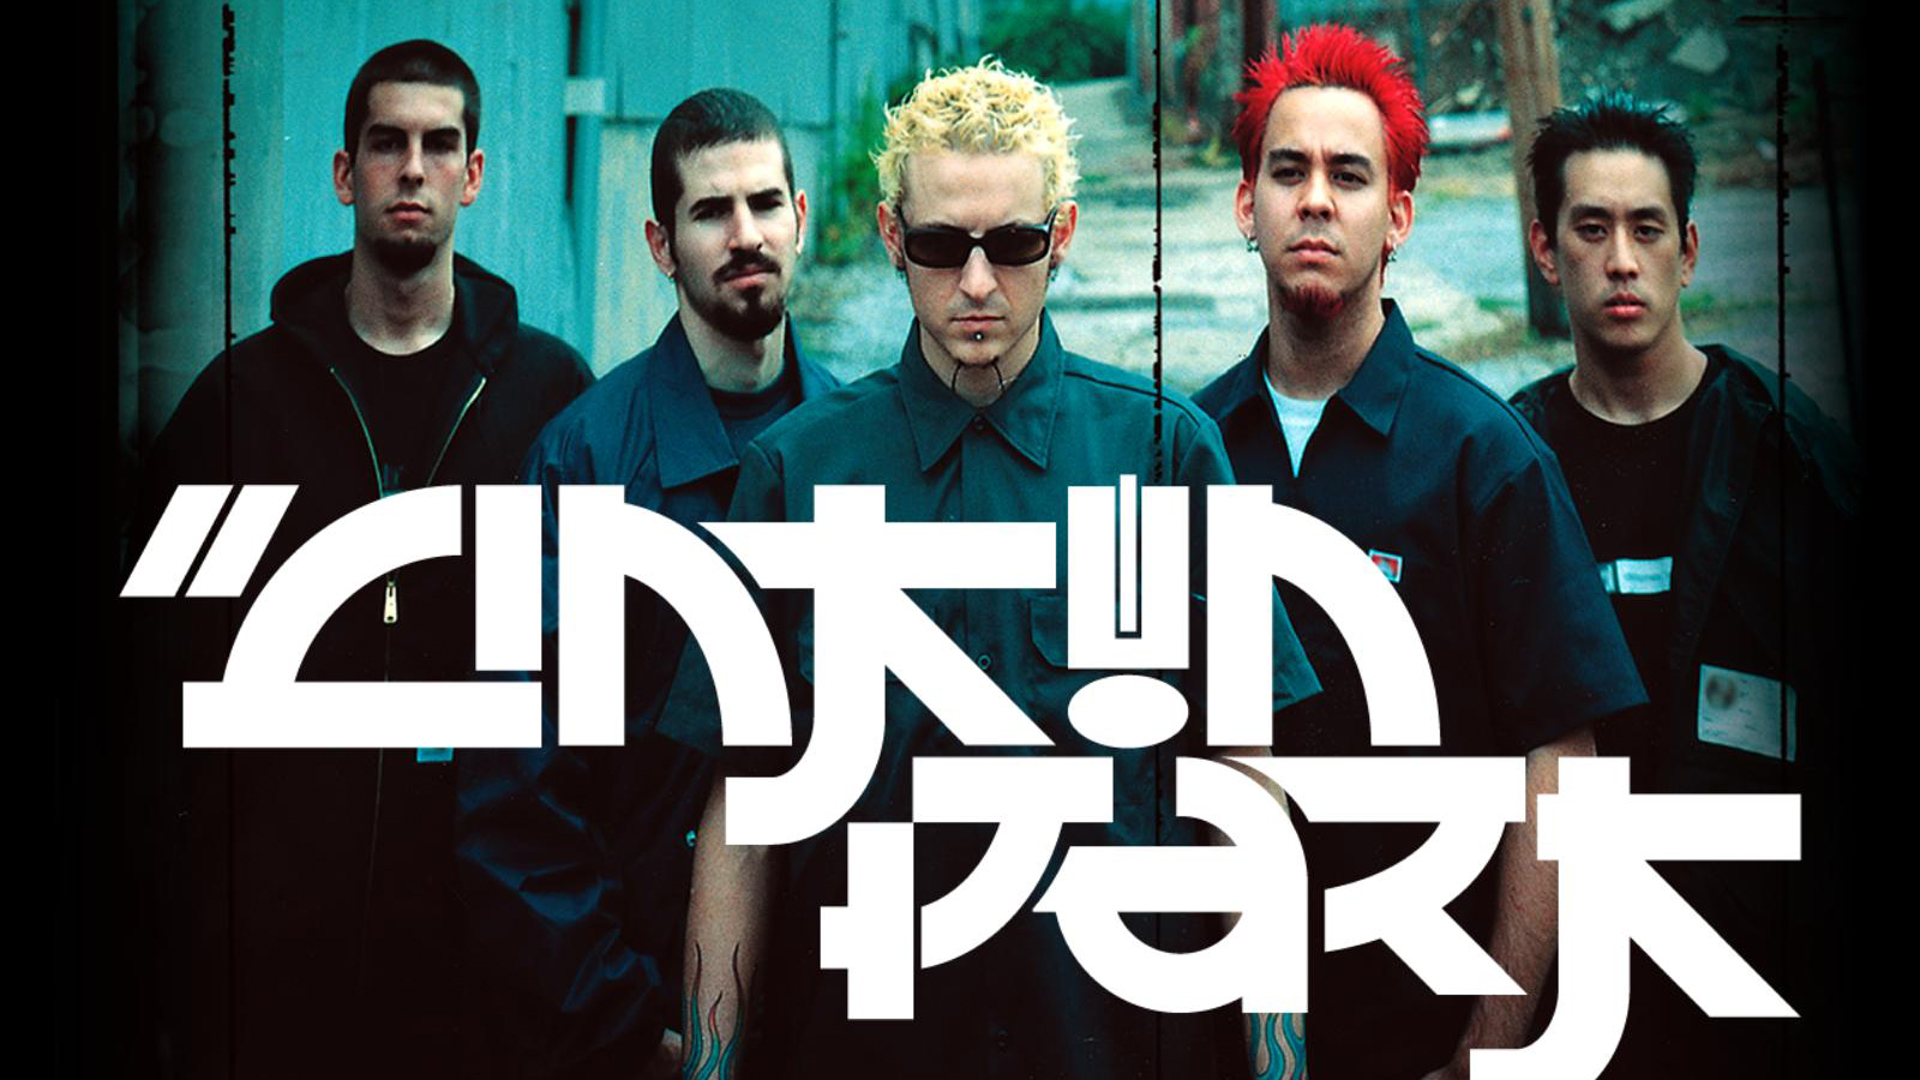 Linkin Park Group Photo